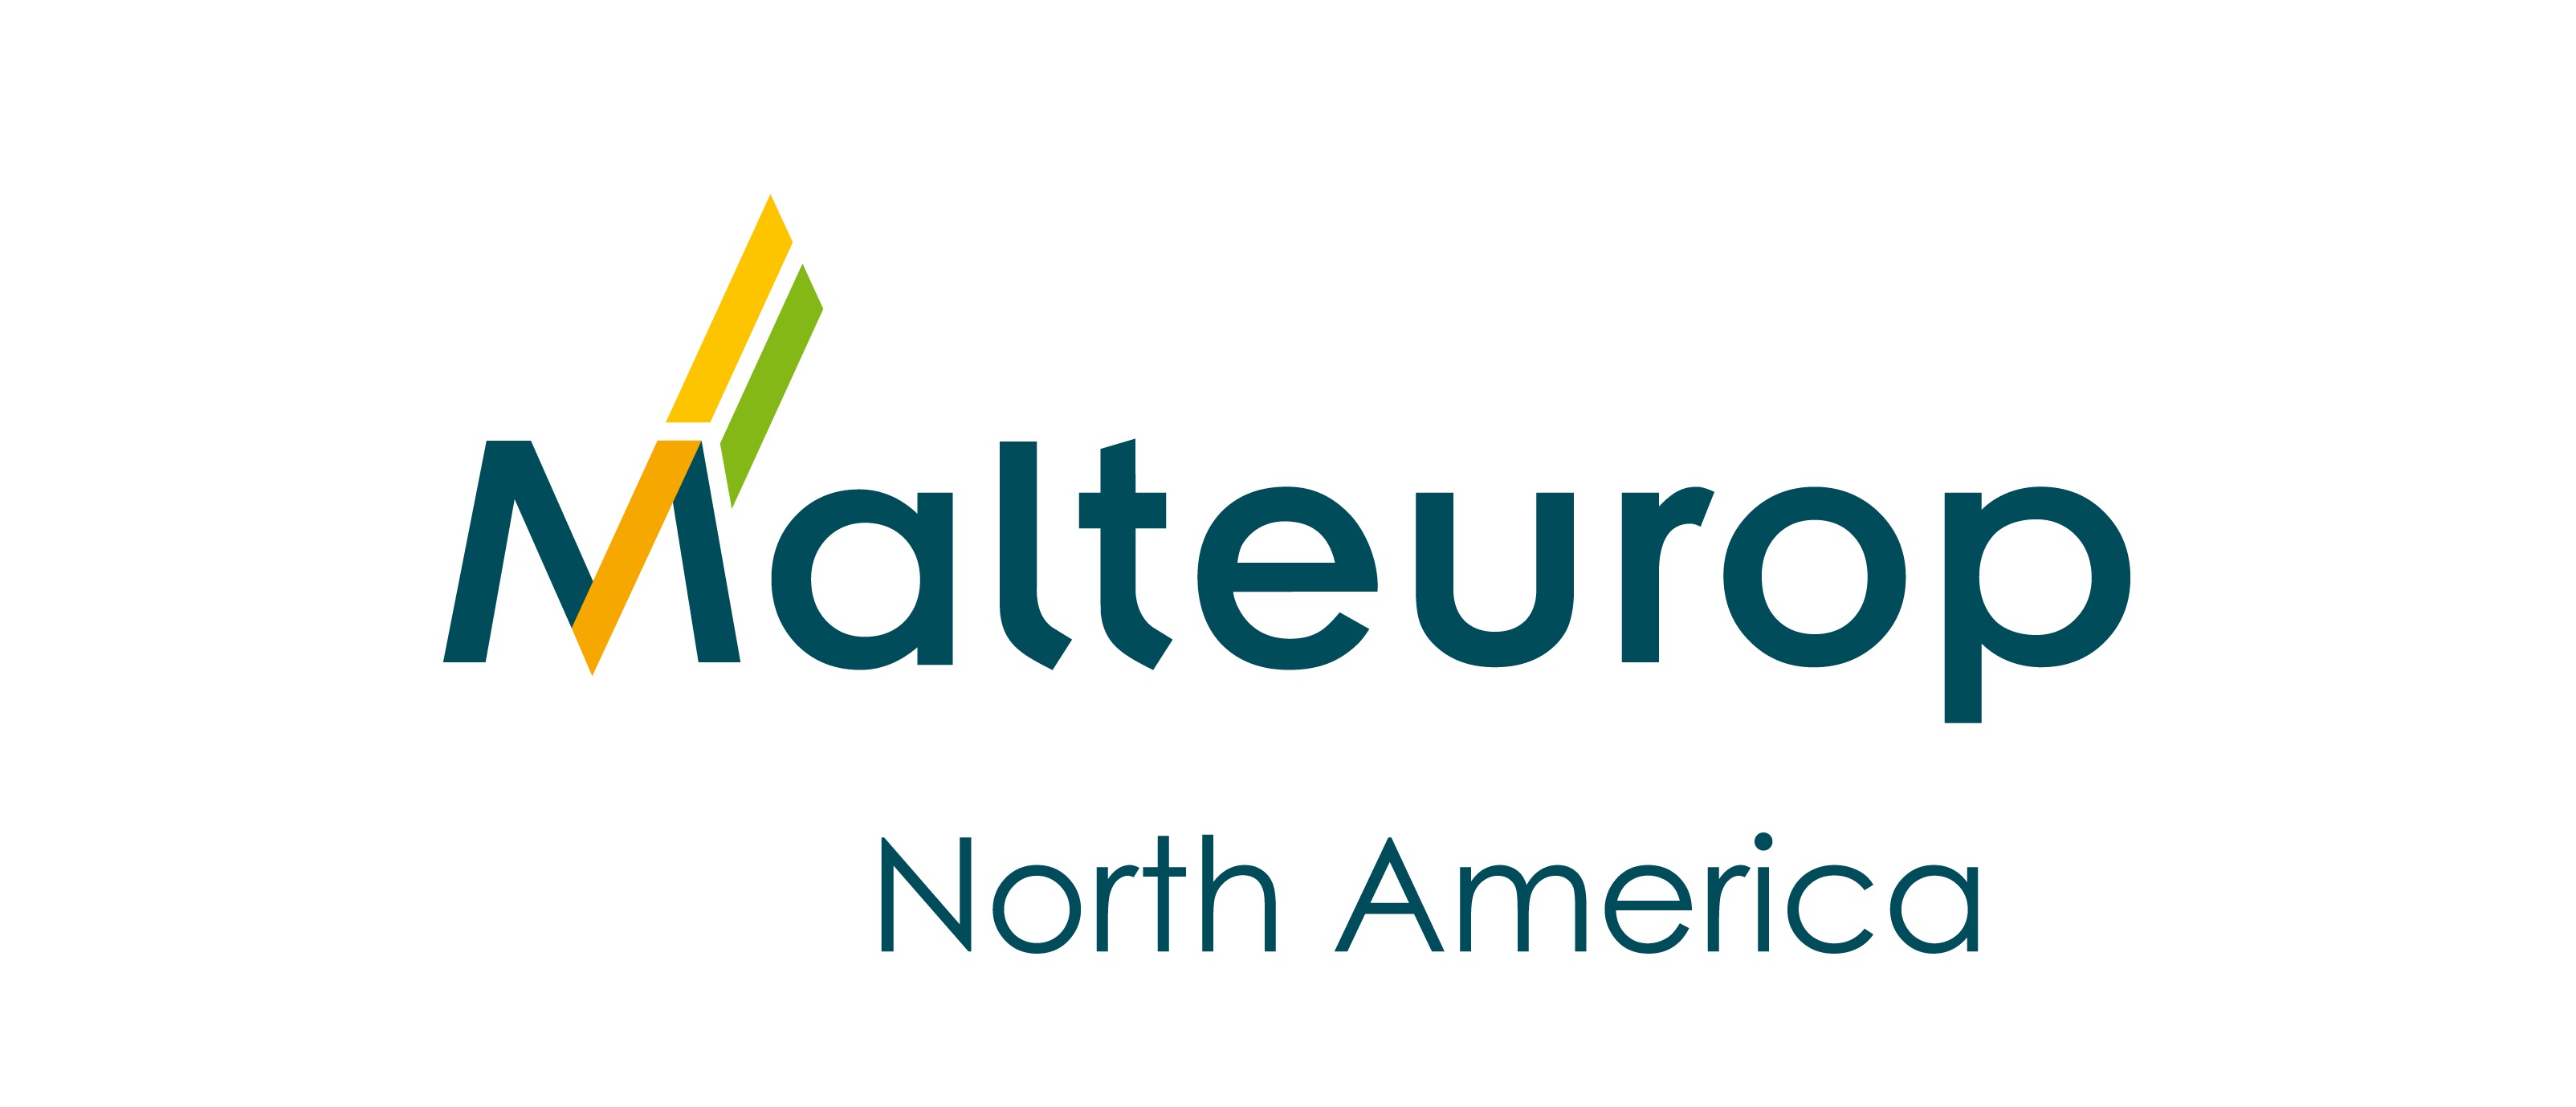 Malteurop North America jobs